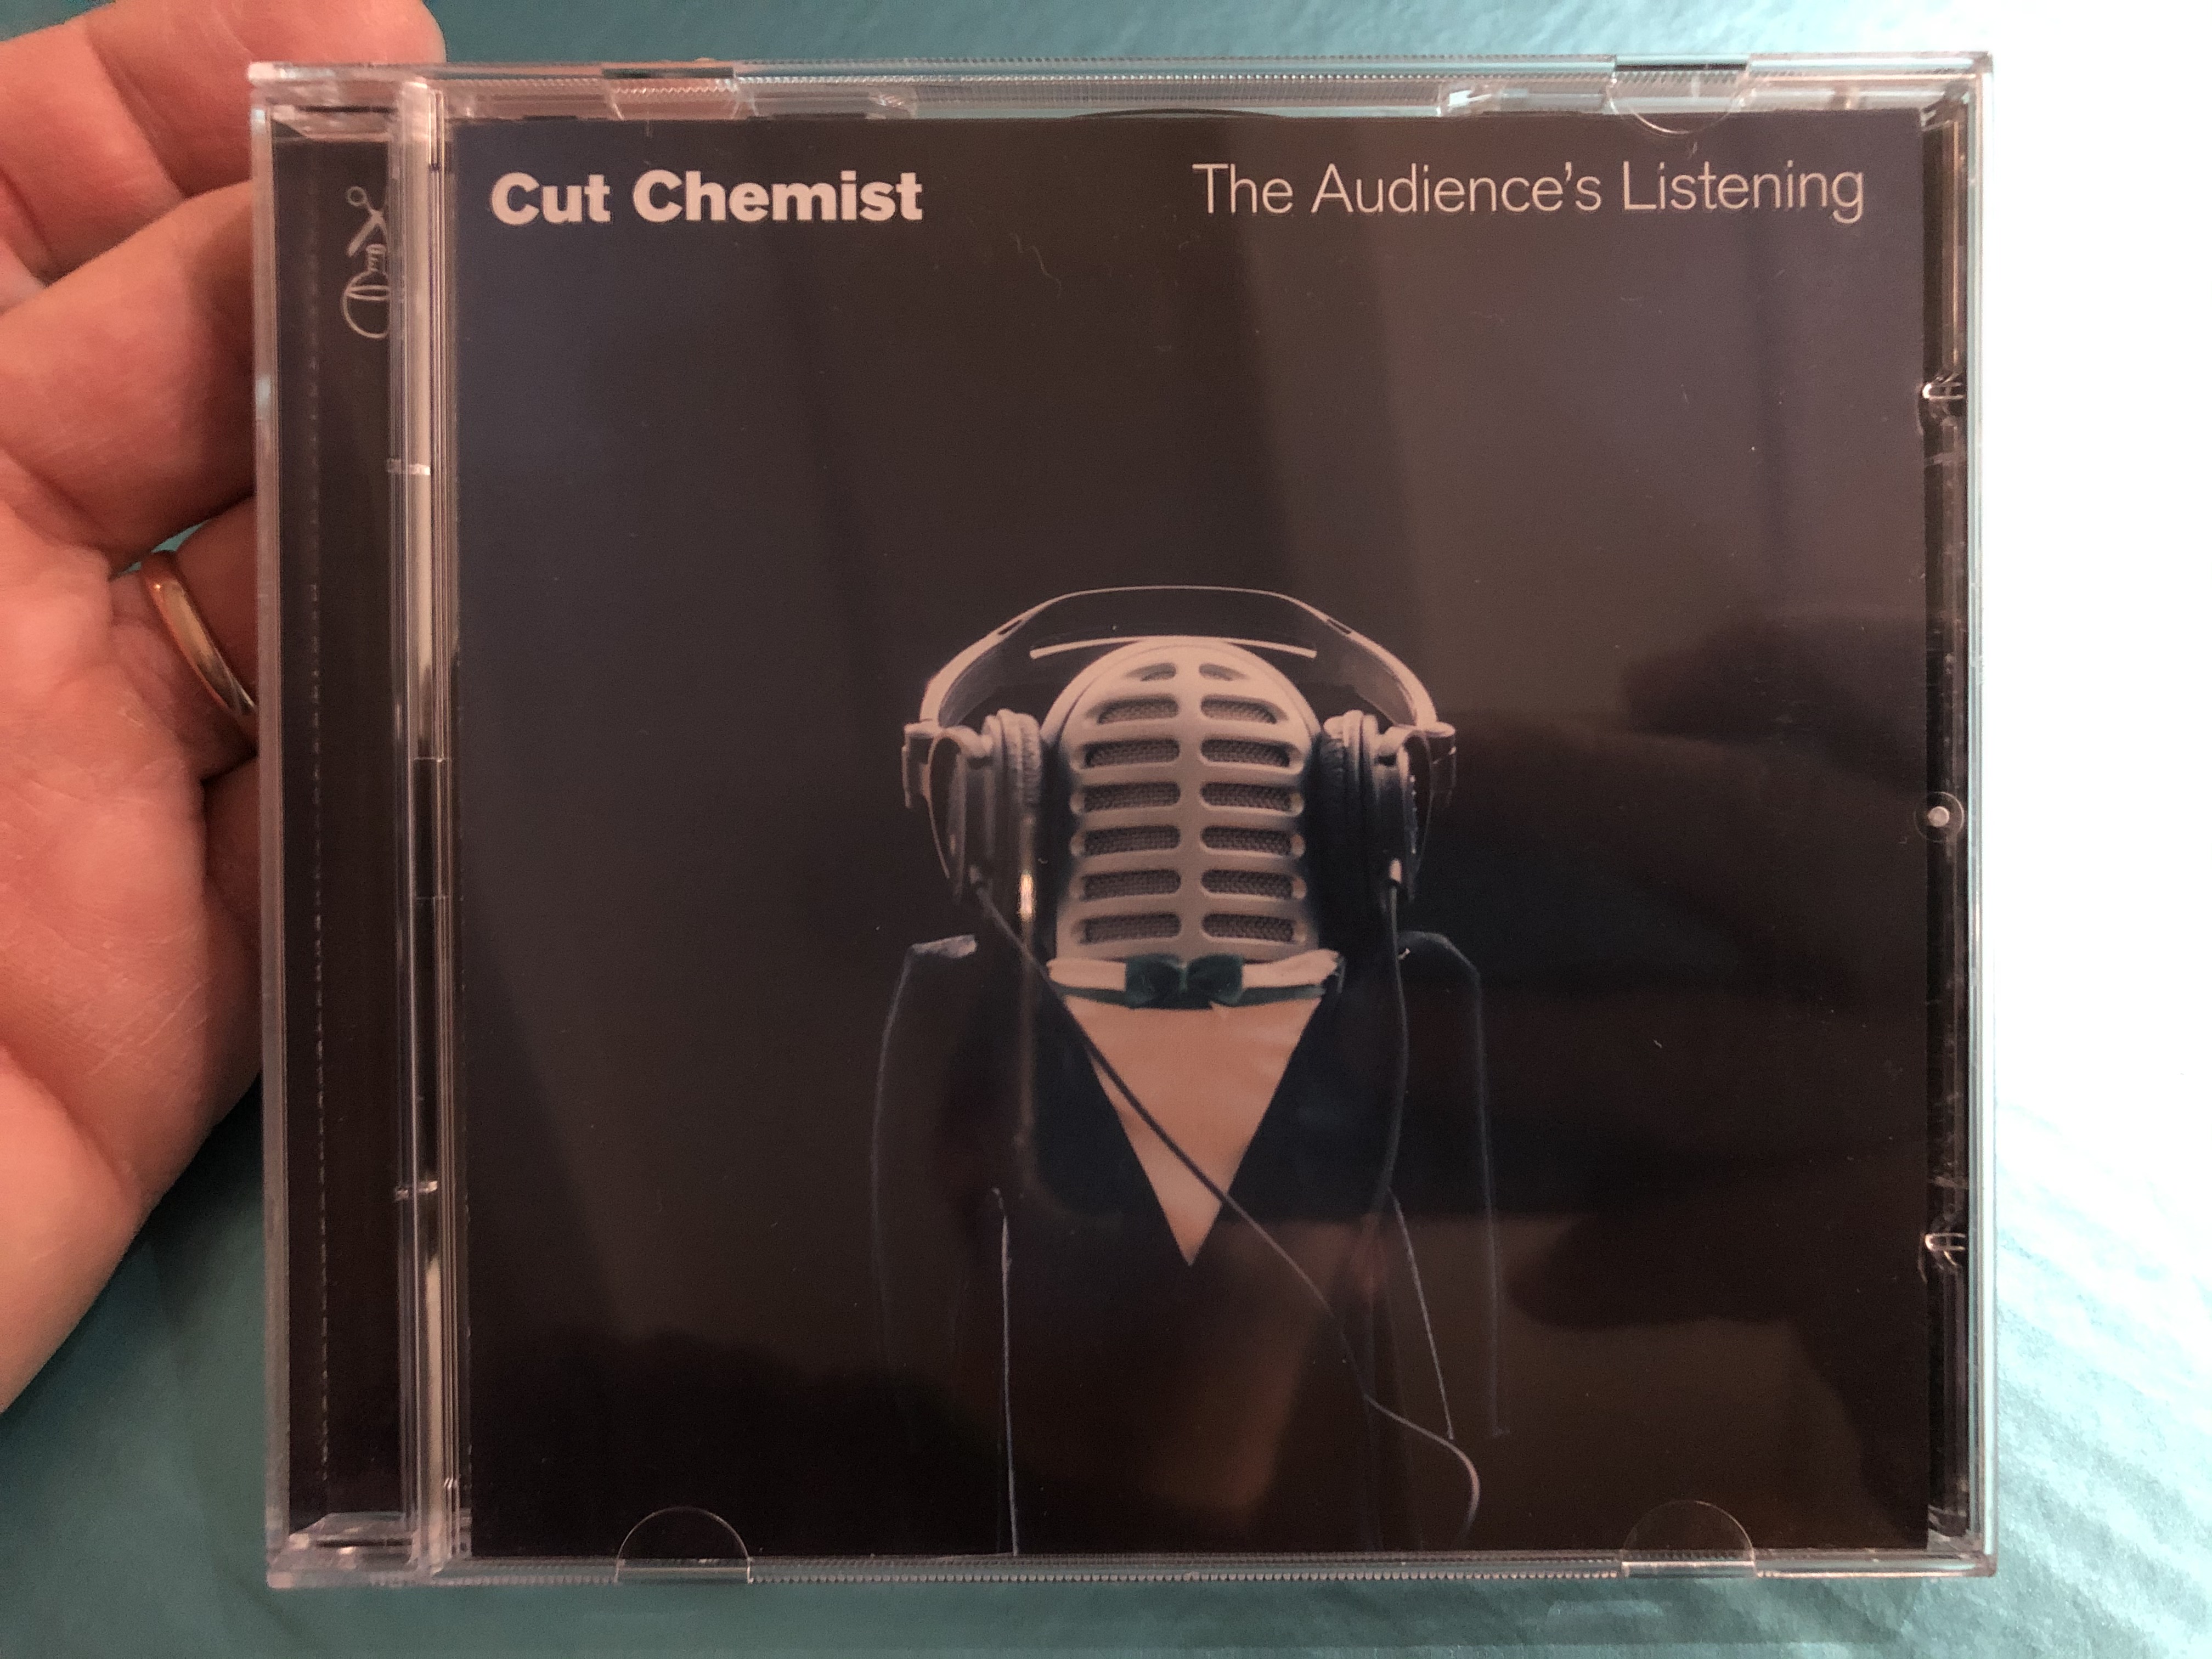 cut-chemist-the-audience-s-listening-warner-bros.-records-audio-cd-2006-9362-48559-2-1-.jpg